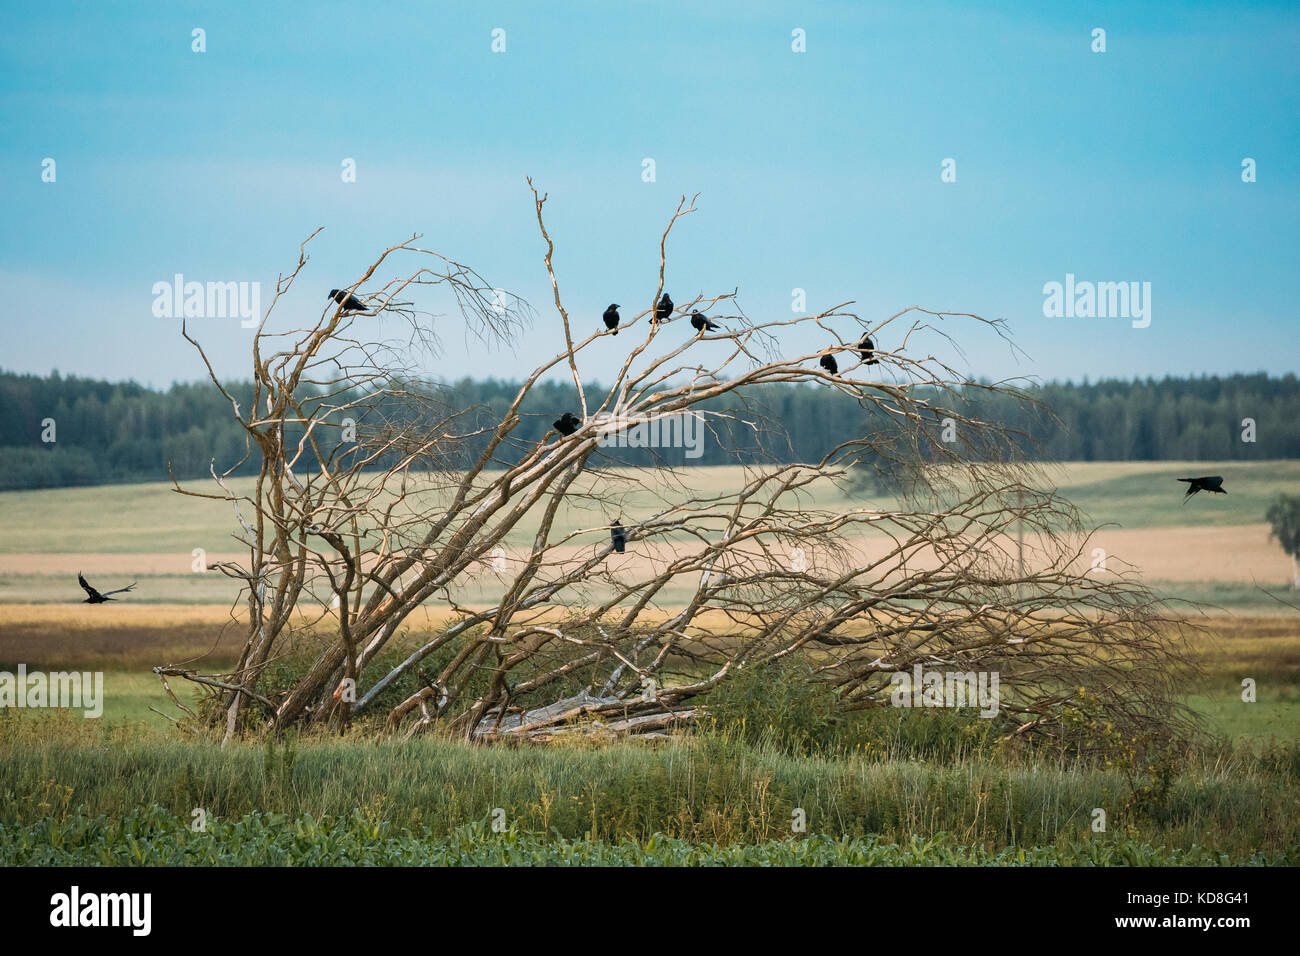 Black Сrows Wild Birds Sitting On Dry Fallen Tree In Field. Belarusian Nature. Stock Photo